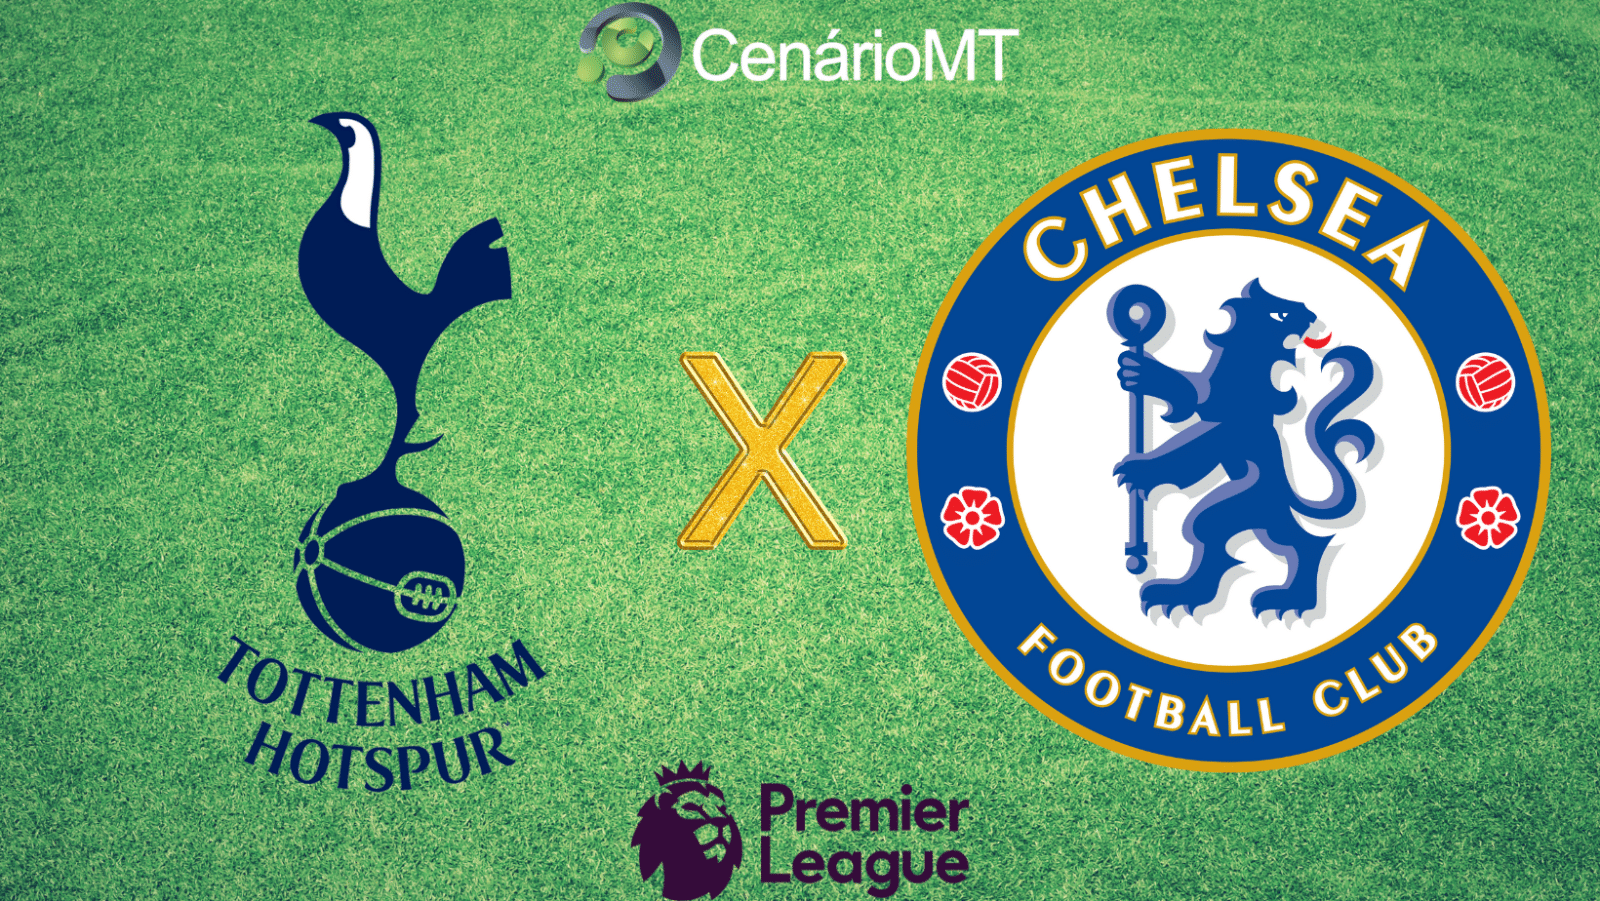 AO VIVO - Chelsea x Tottenham